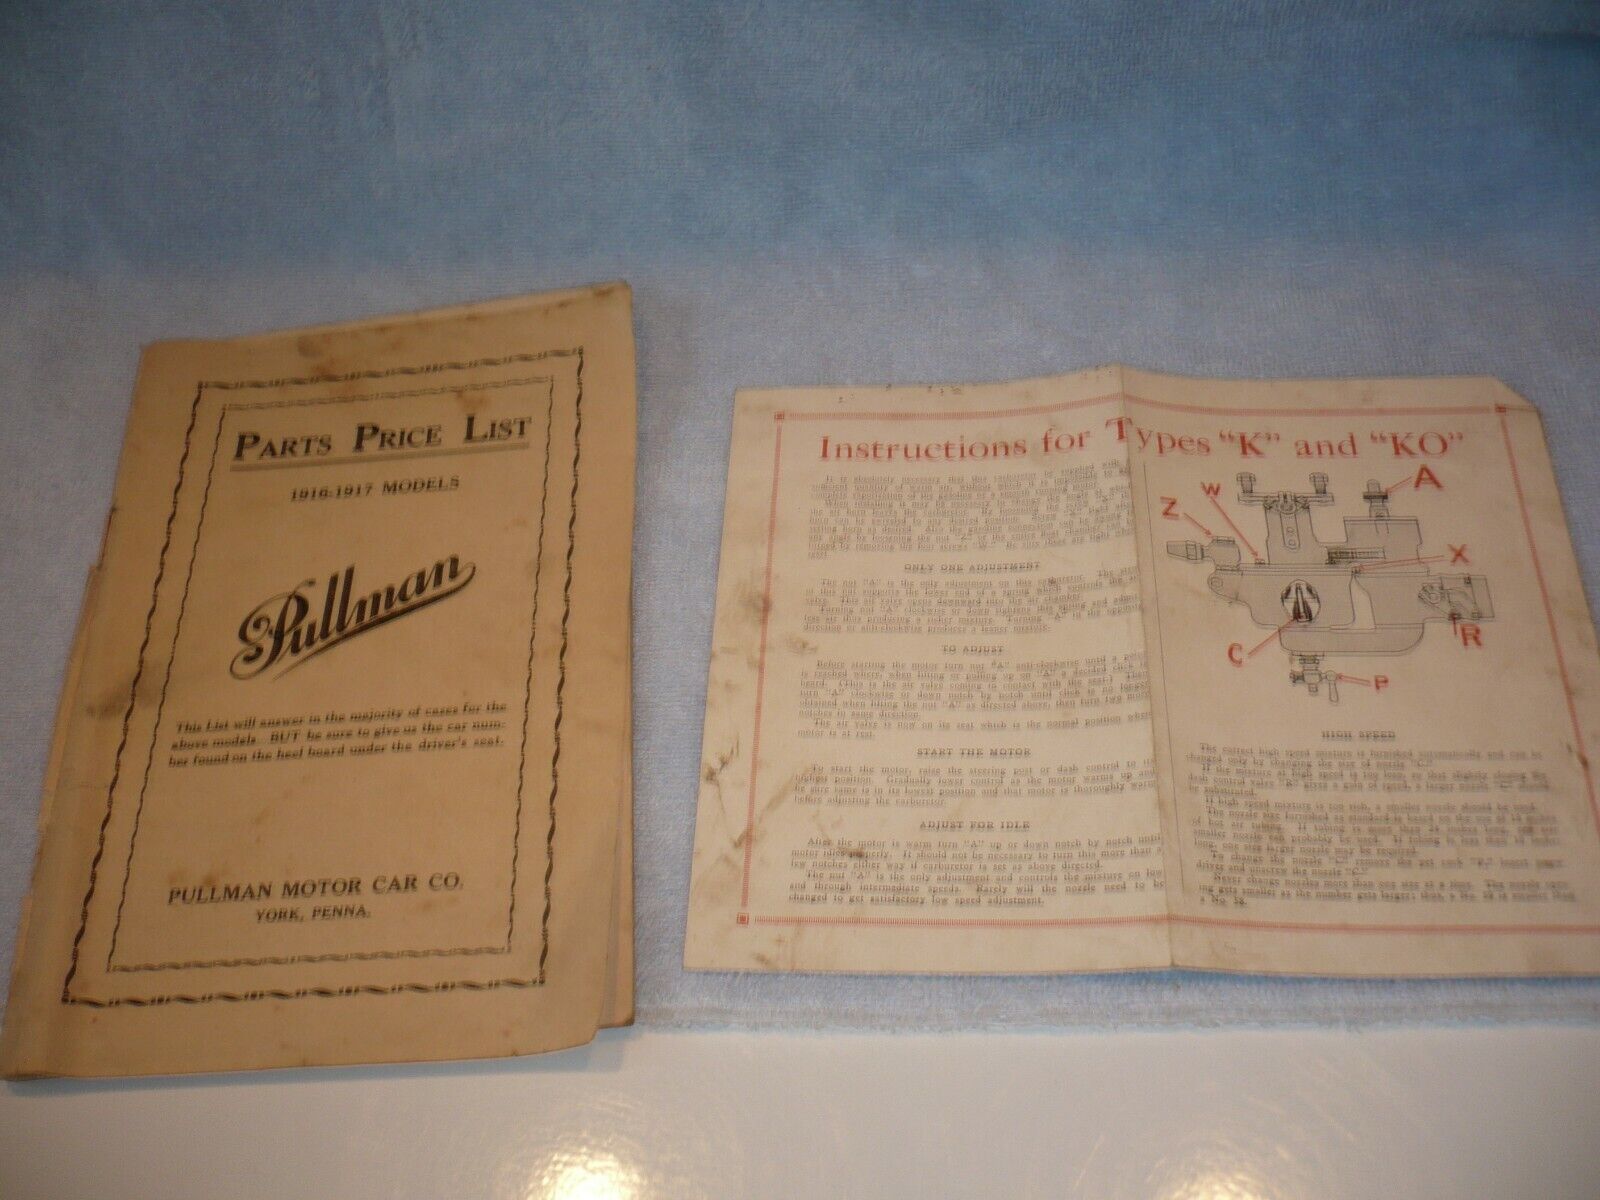  1916-1917 pullman motor car company york pa parts price list 